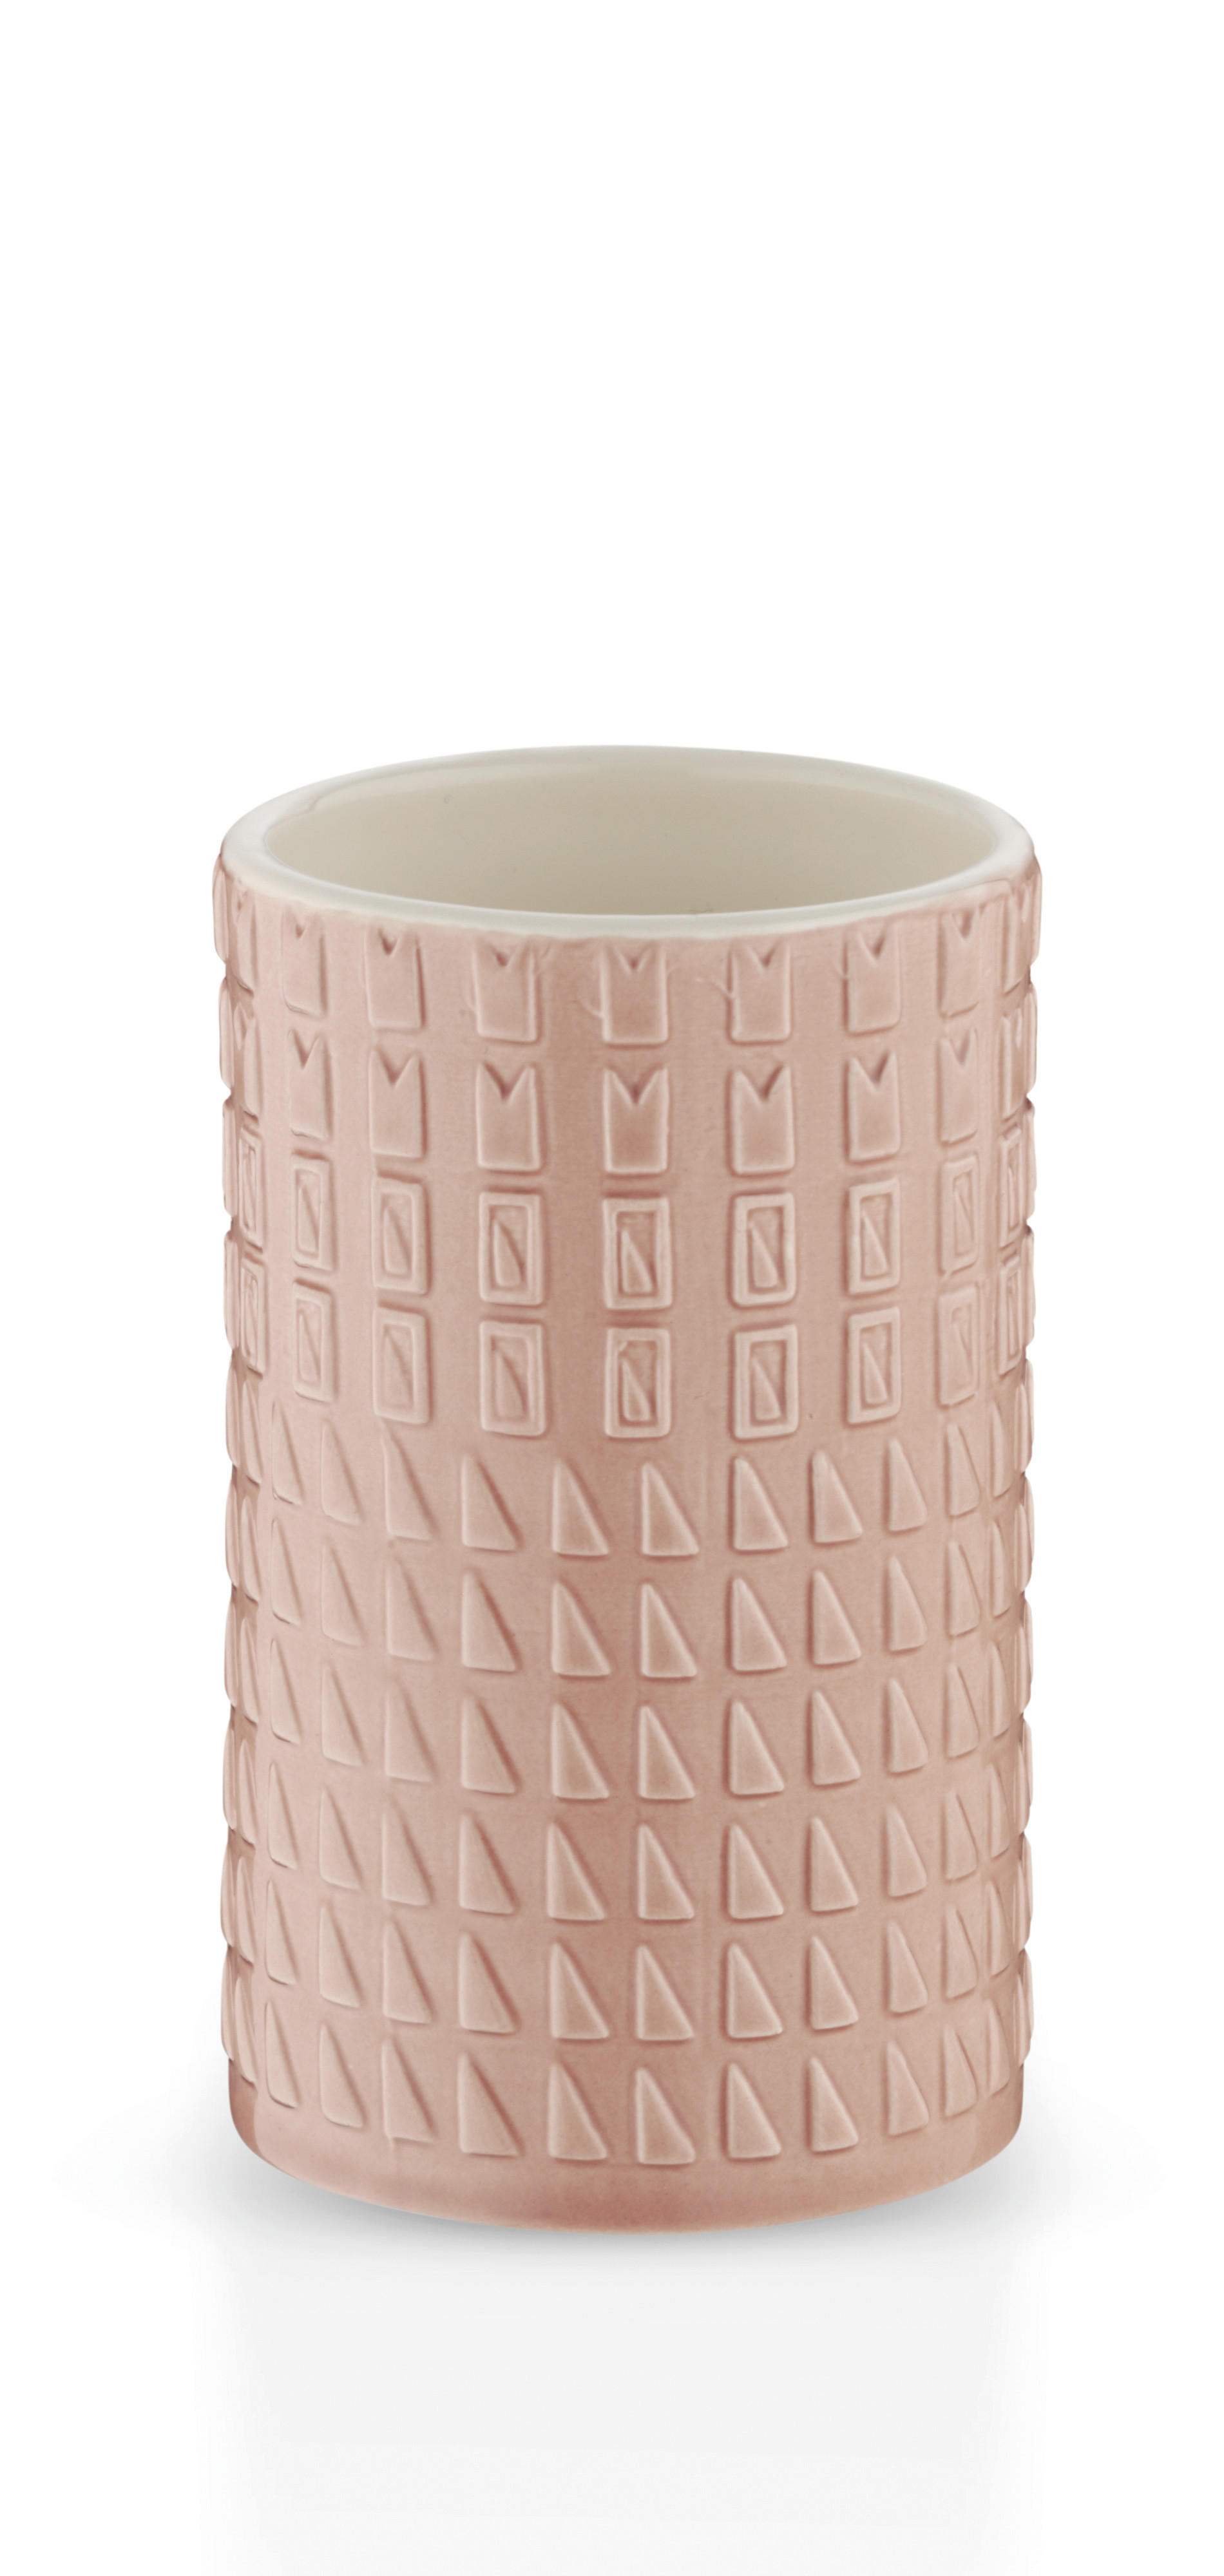 ČAŠA ZA KUPATILO  ružičasta  keramika  - ružičasta, Konvencionalno, keramika (6,5/11cm) - Kela